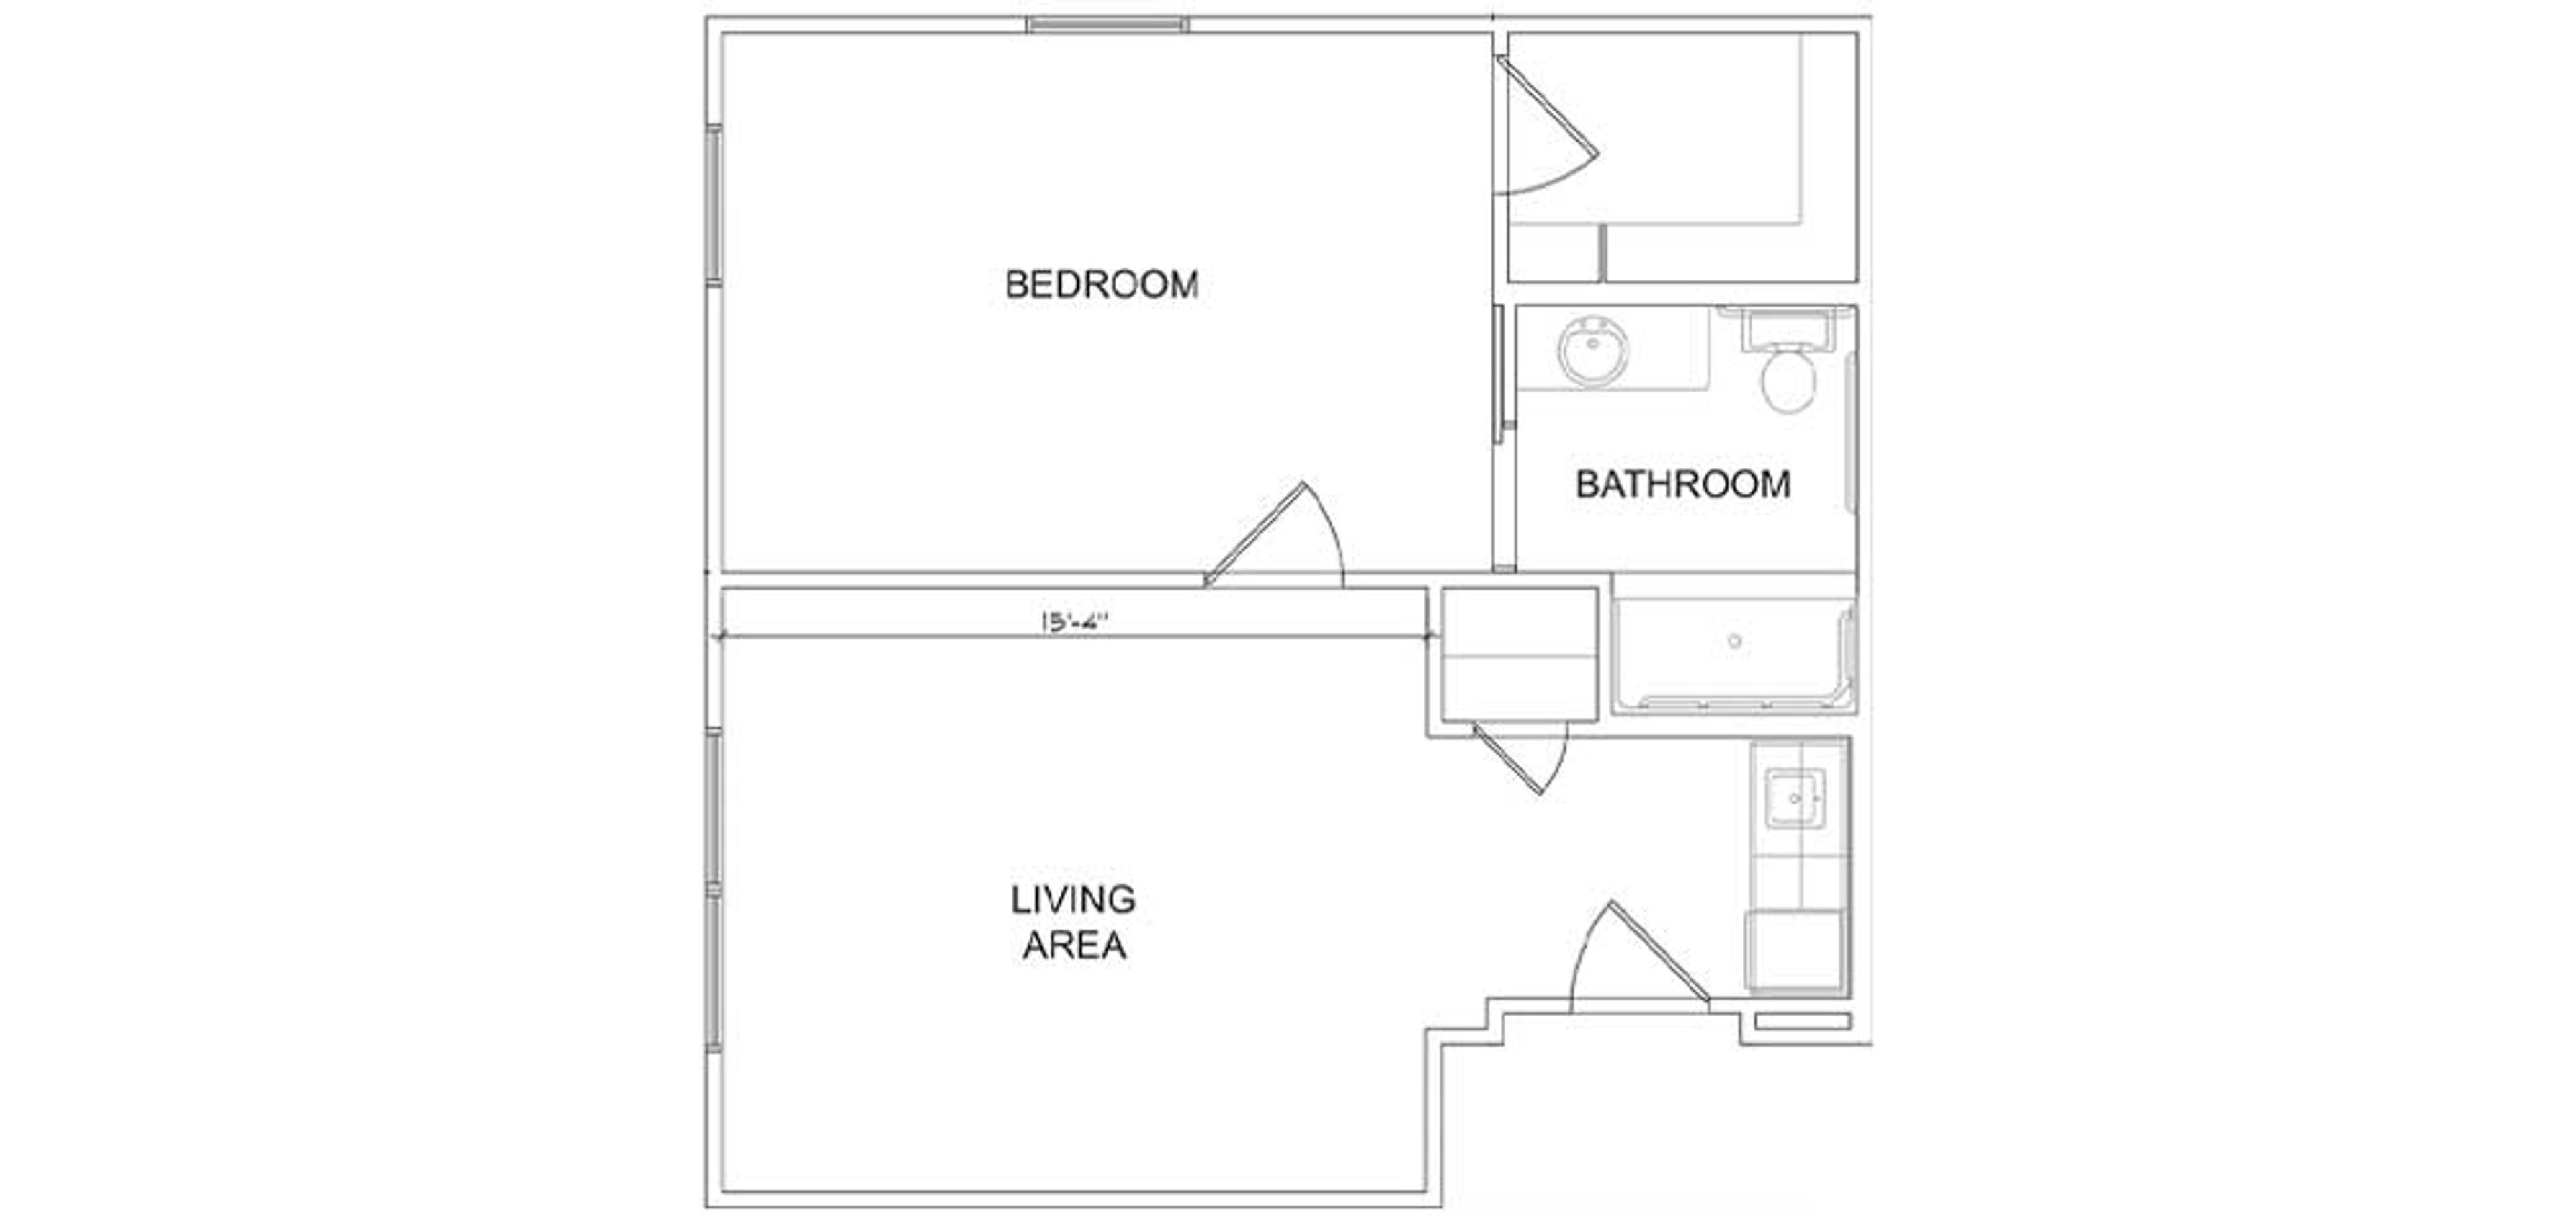 Floorplan - Spring Lake - 1 bed, 1 bath, Luxury Assisted Living